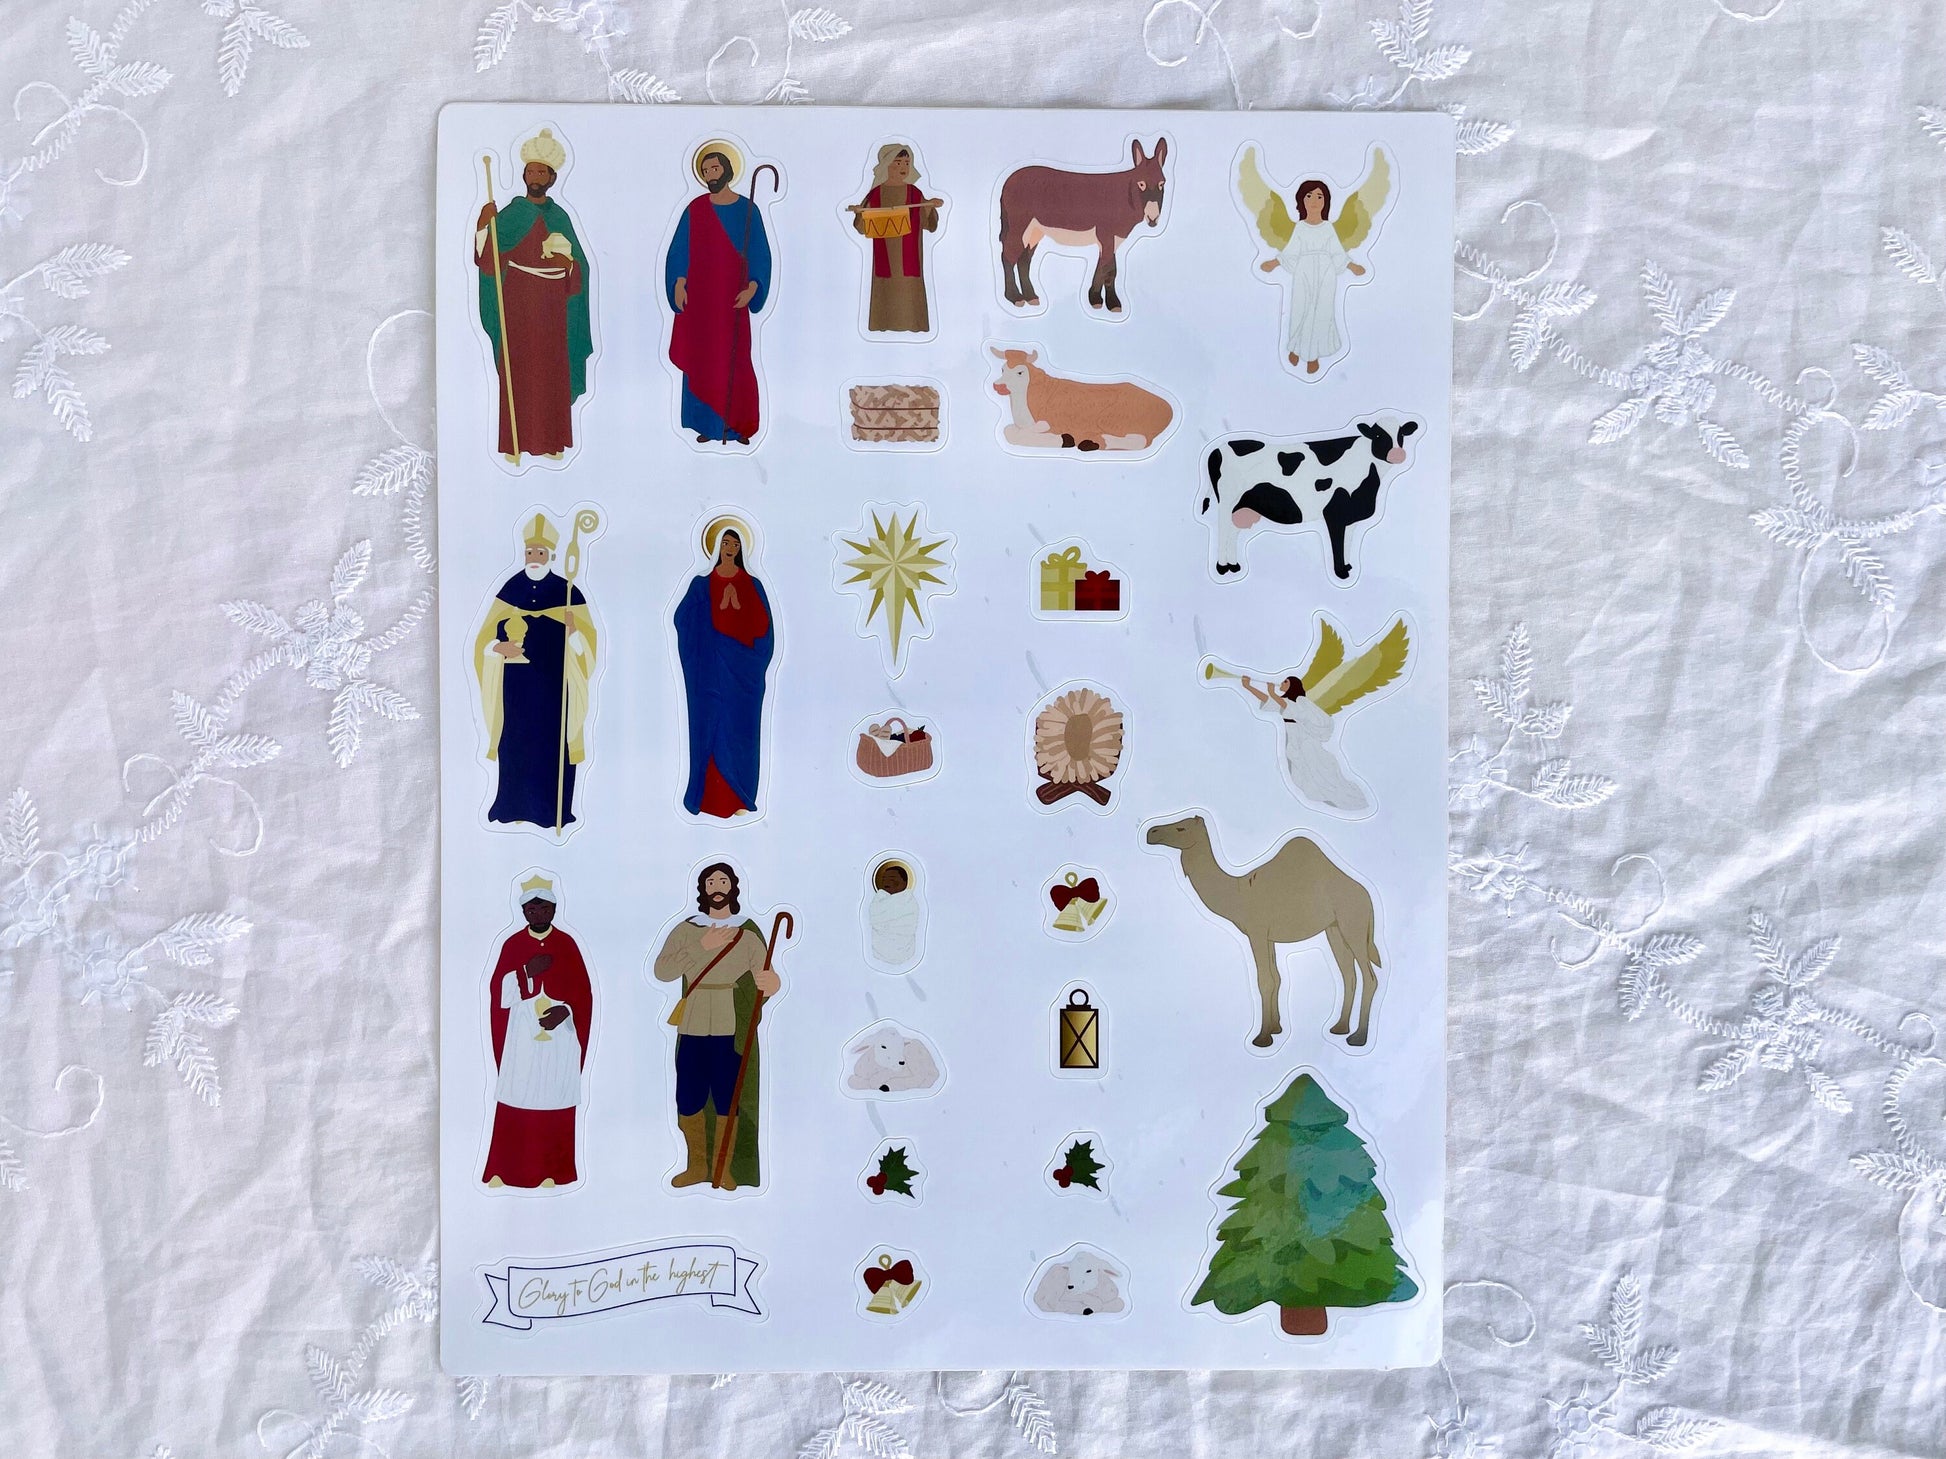 nativity scene sticker set